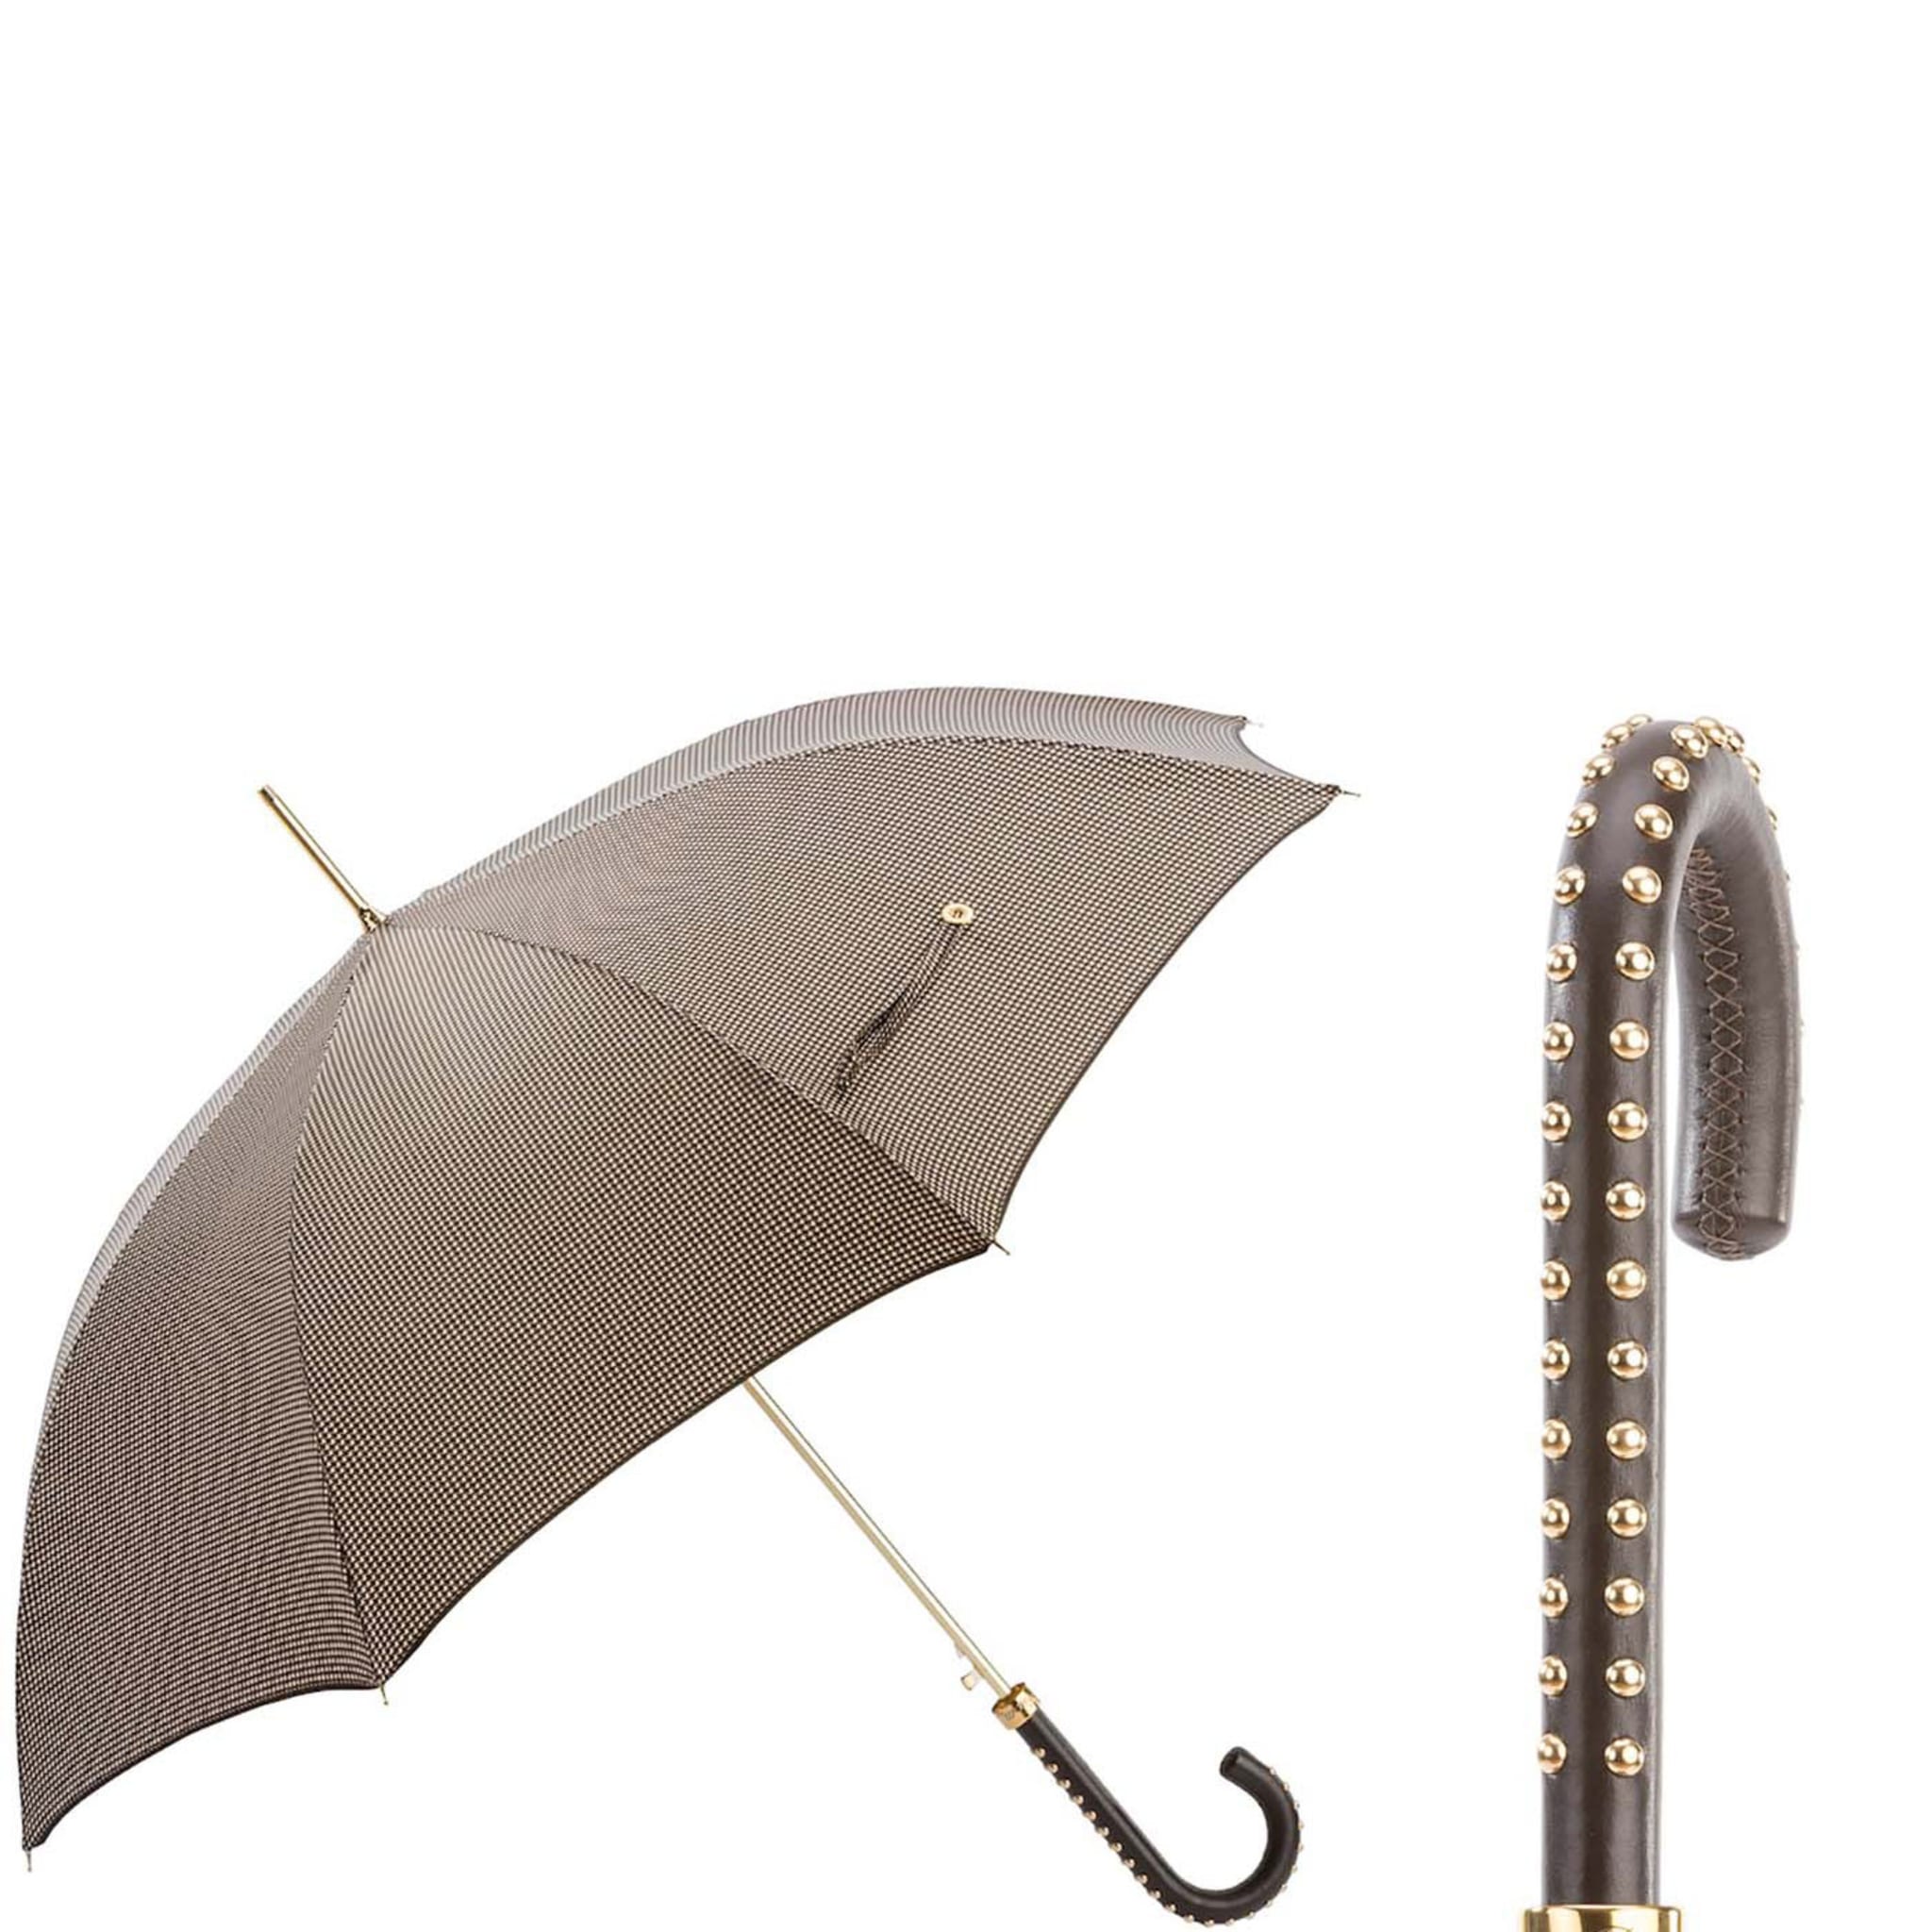 Pied de Poule Umbrella with Studded Leather Handle - Alternative view 1